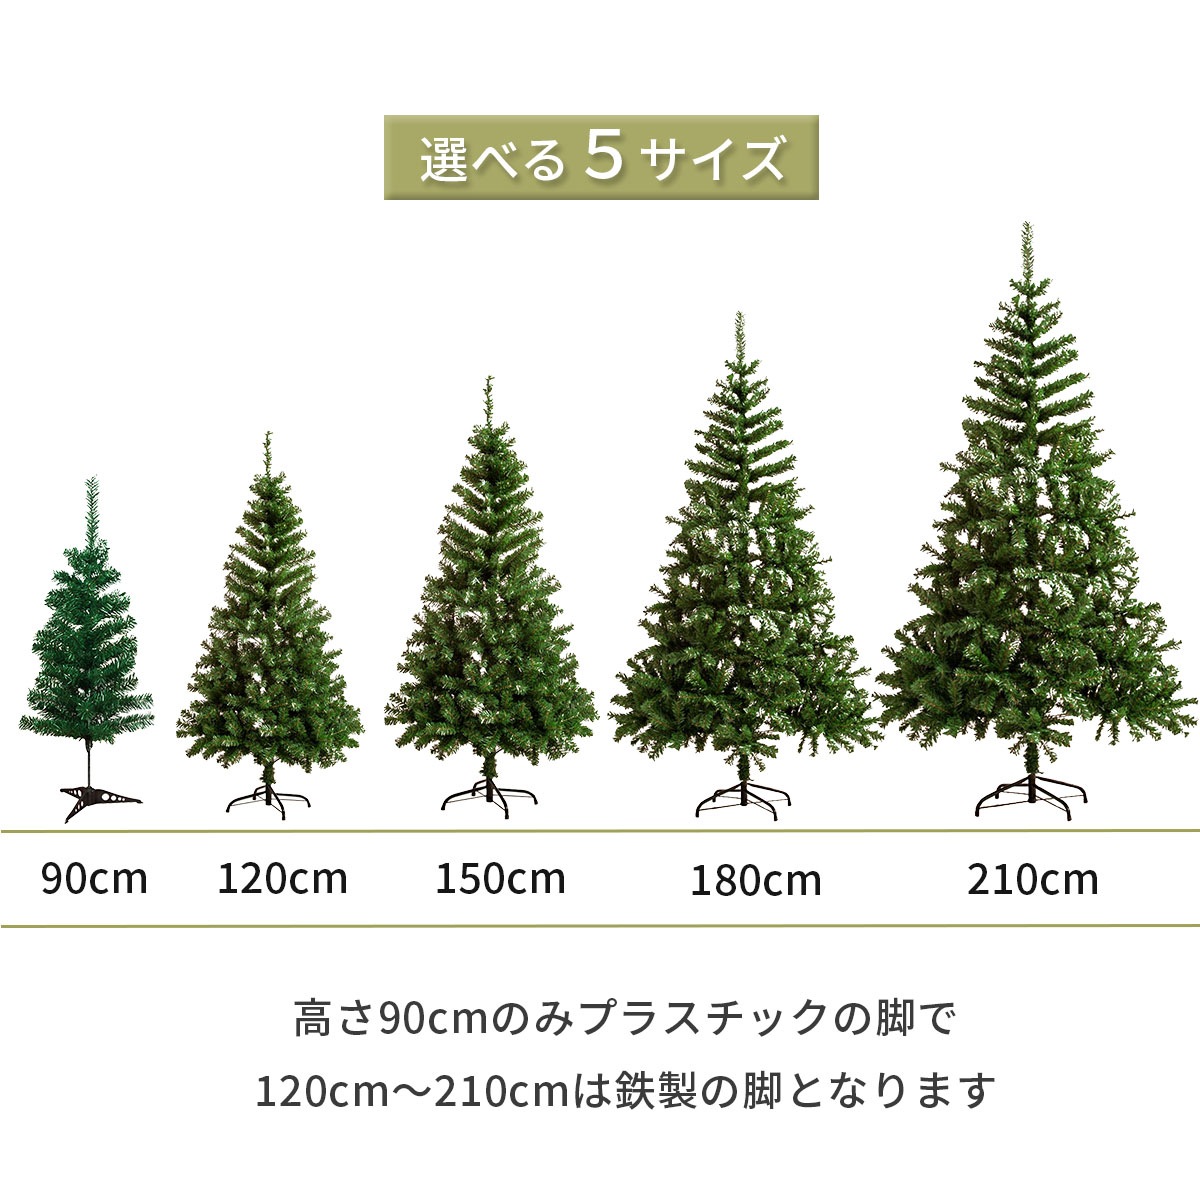 150cm] VeroMan クリスマスツリー グリーン もみの木 ヌードツリー ...